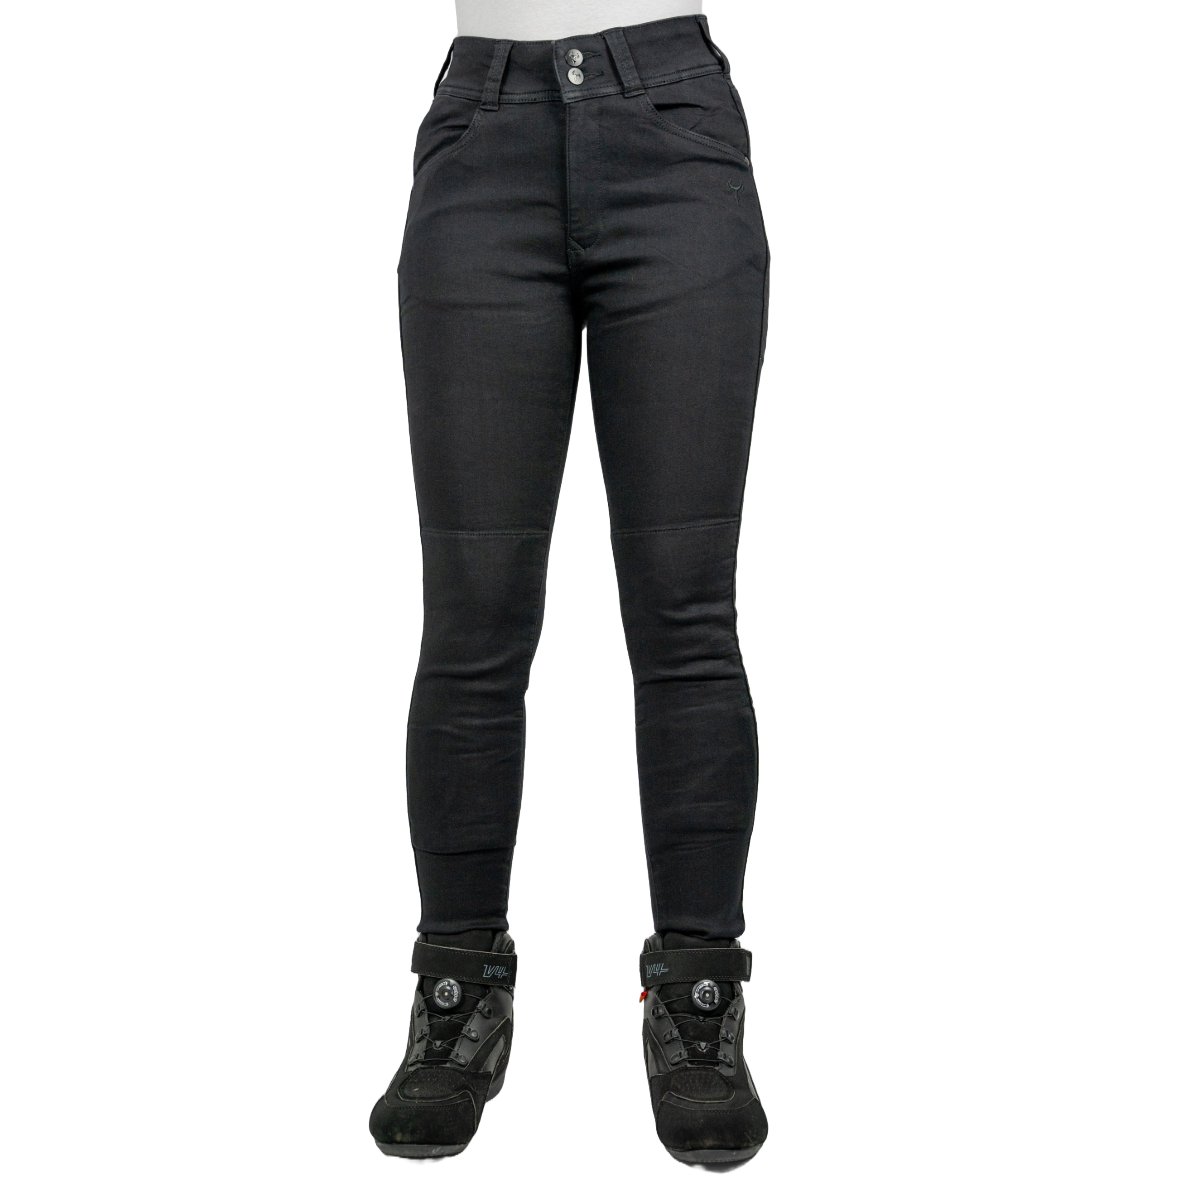 Image of Bull-it Ladies Fury Skinny Fit Short Pants Black Size 50 ID 5059684008890